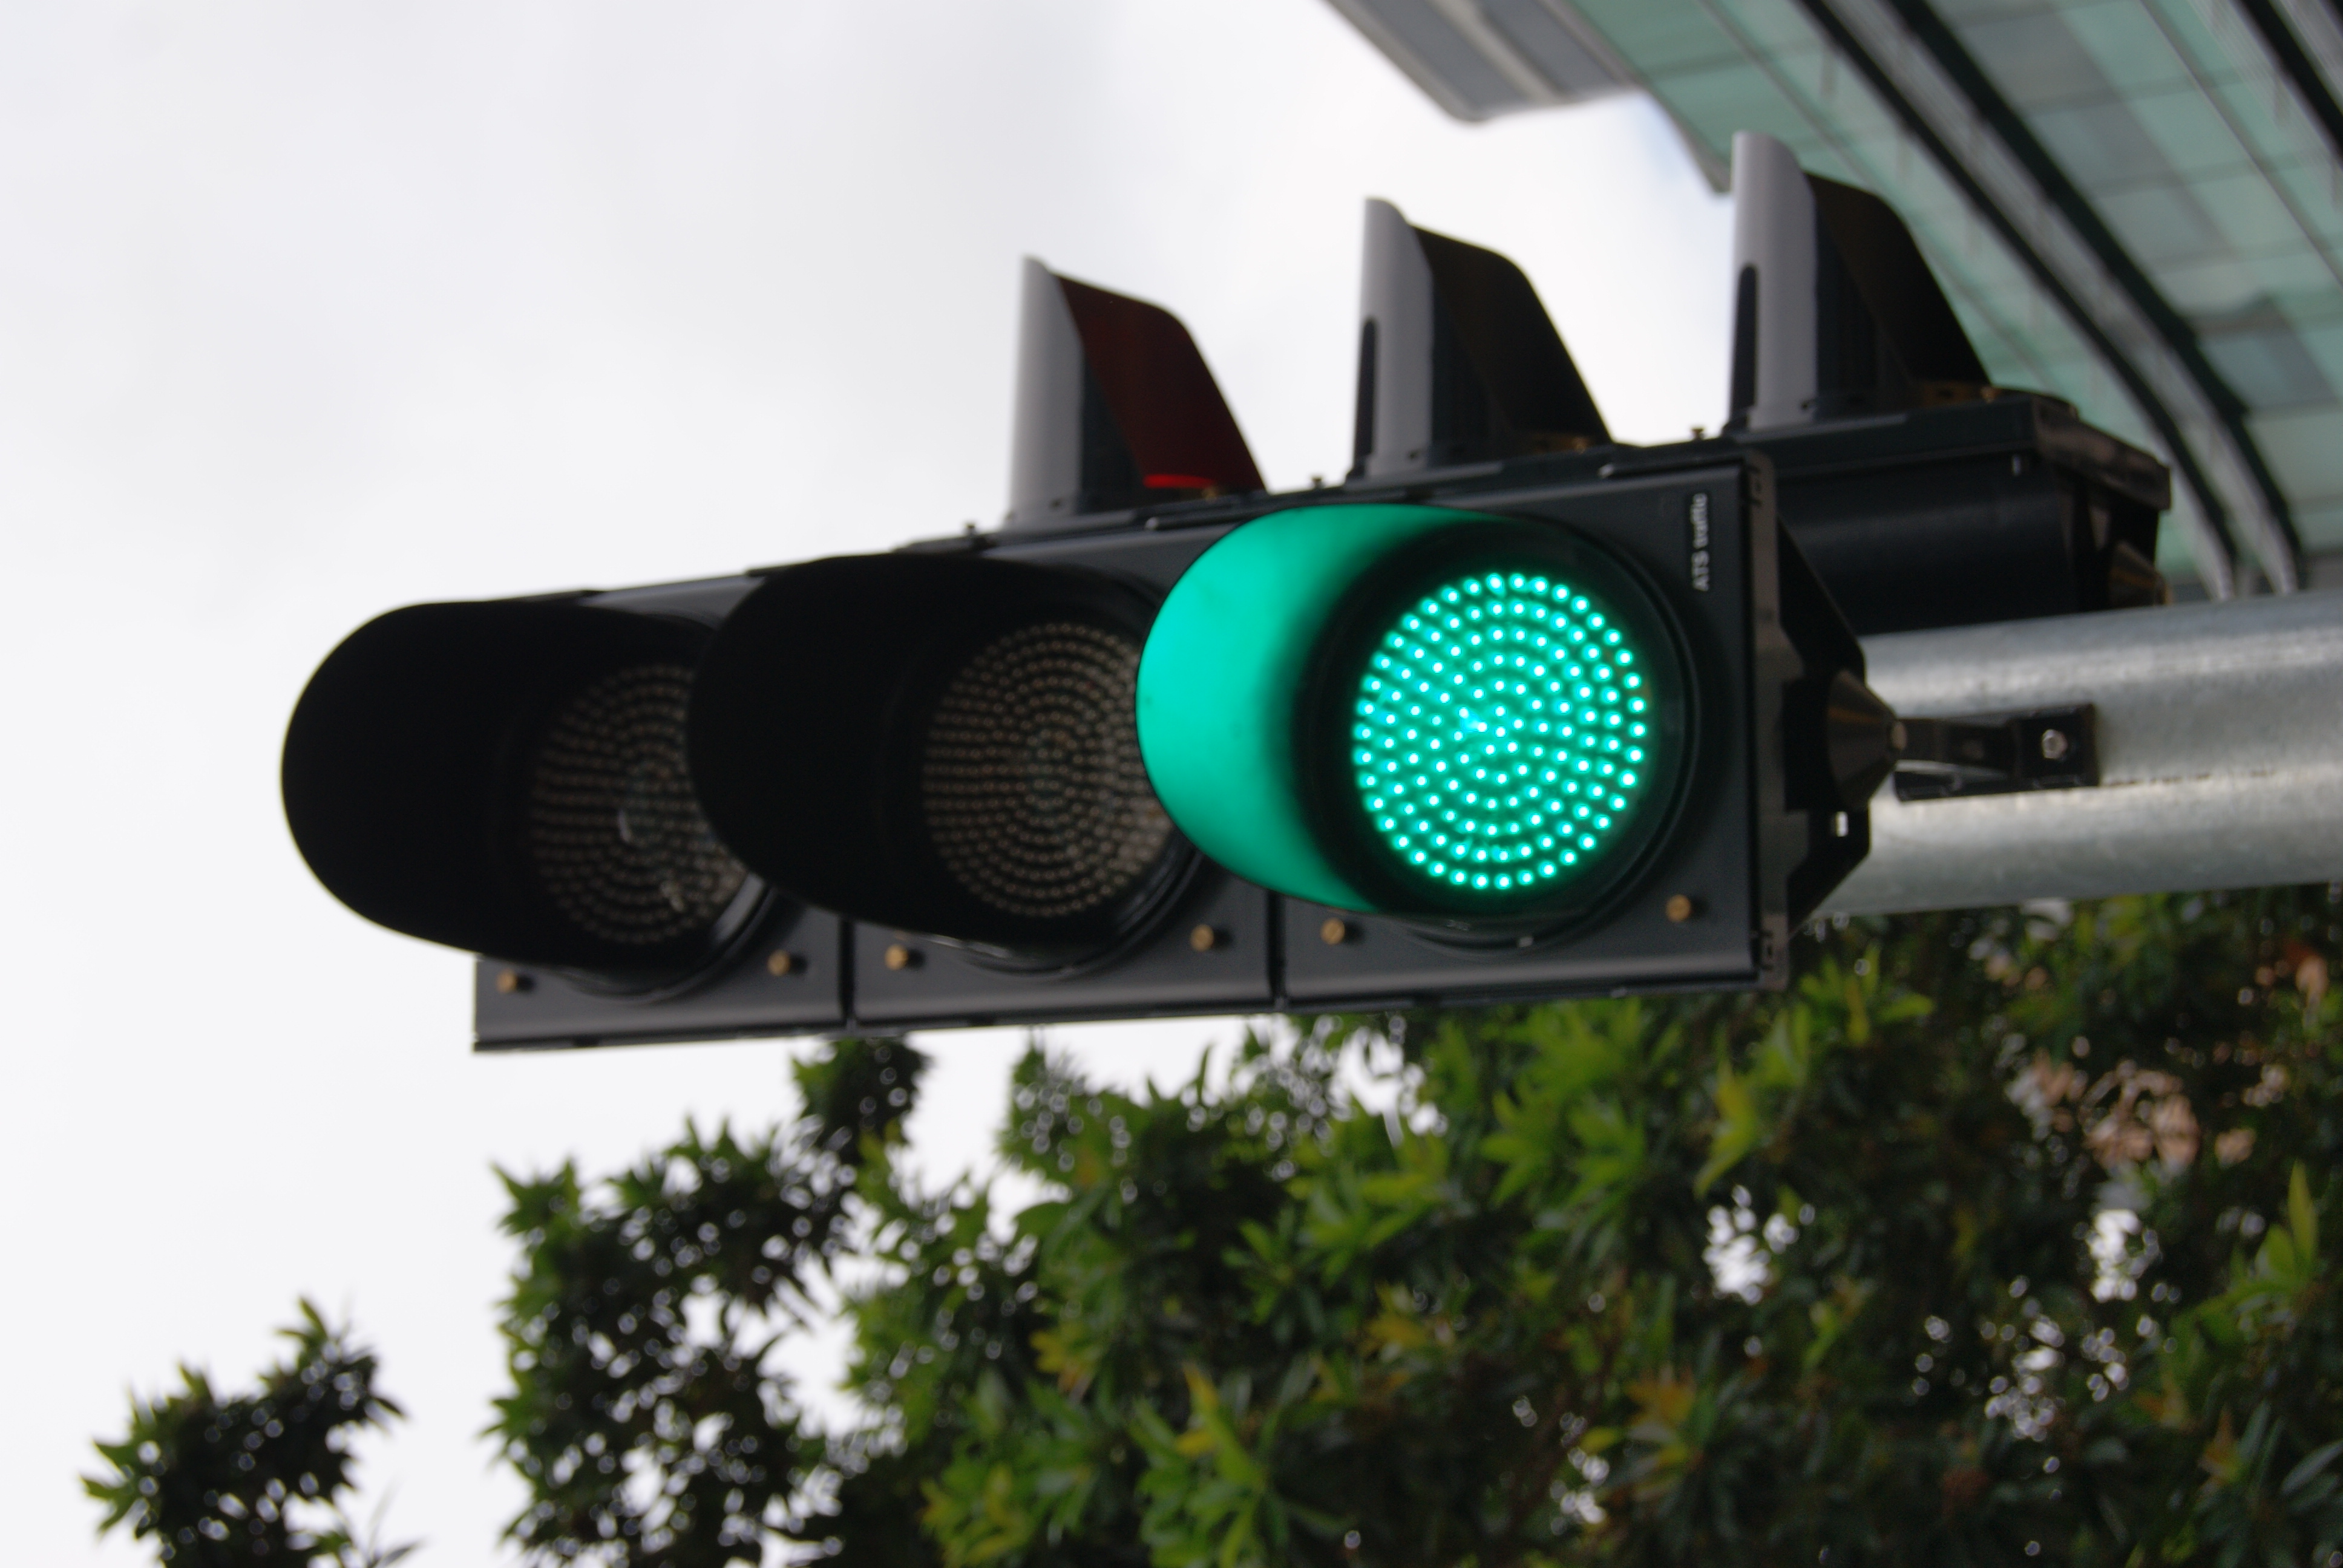 File:Green traffic signal, Stamford Road, Singapore - 20111210-02 ...